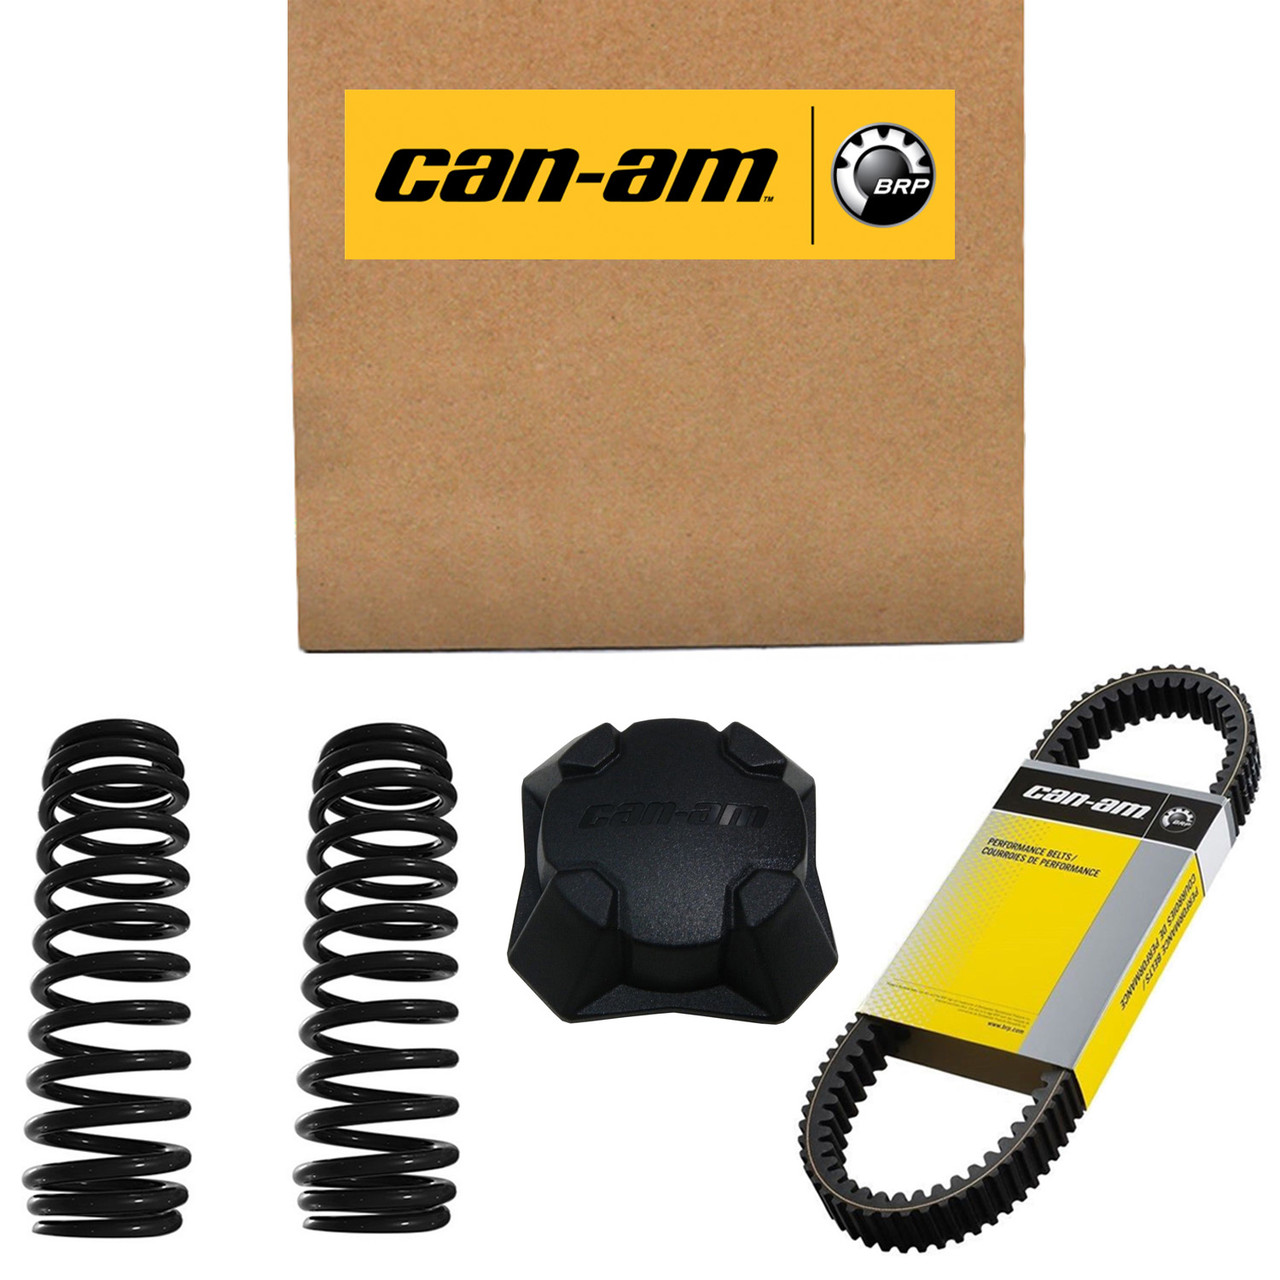 Can-Am New OEM Gear Box, 420686794